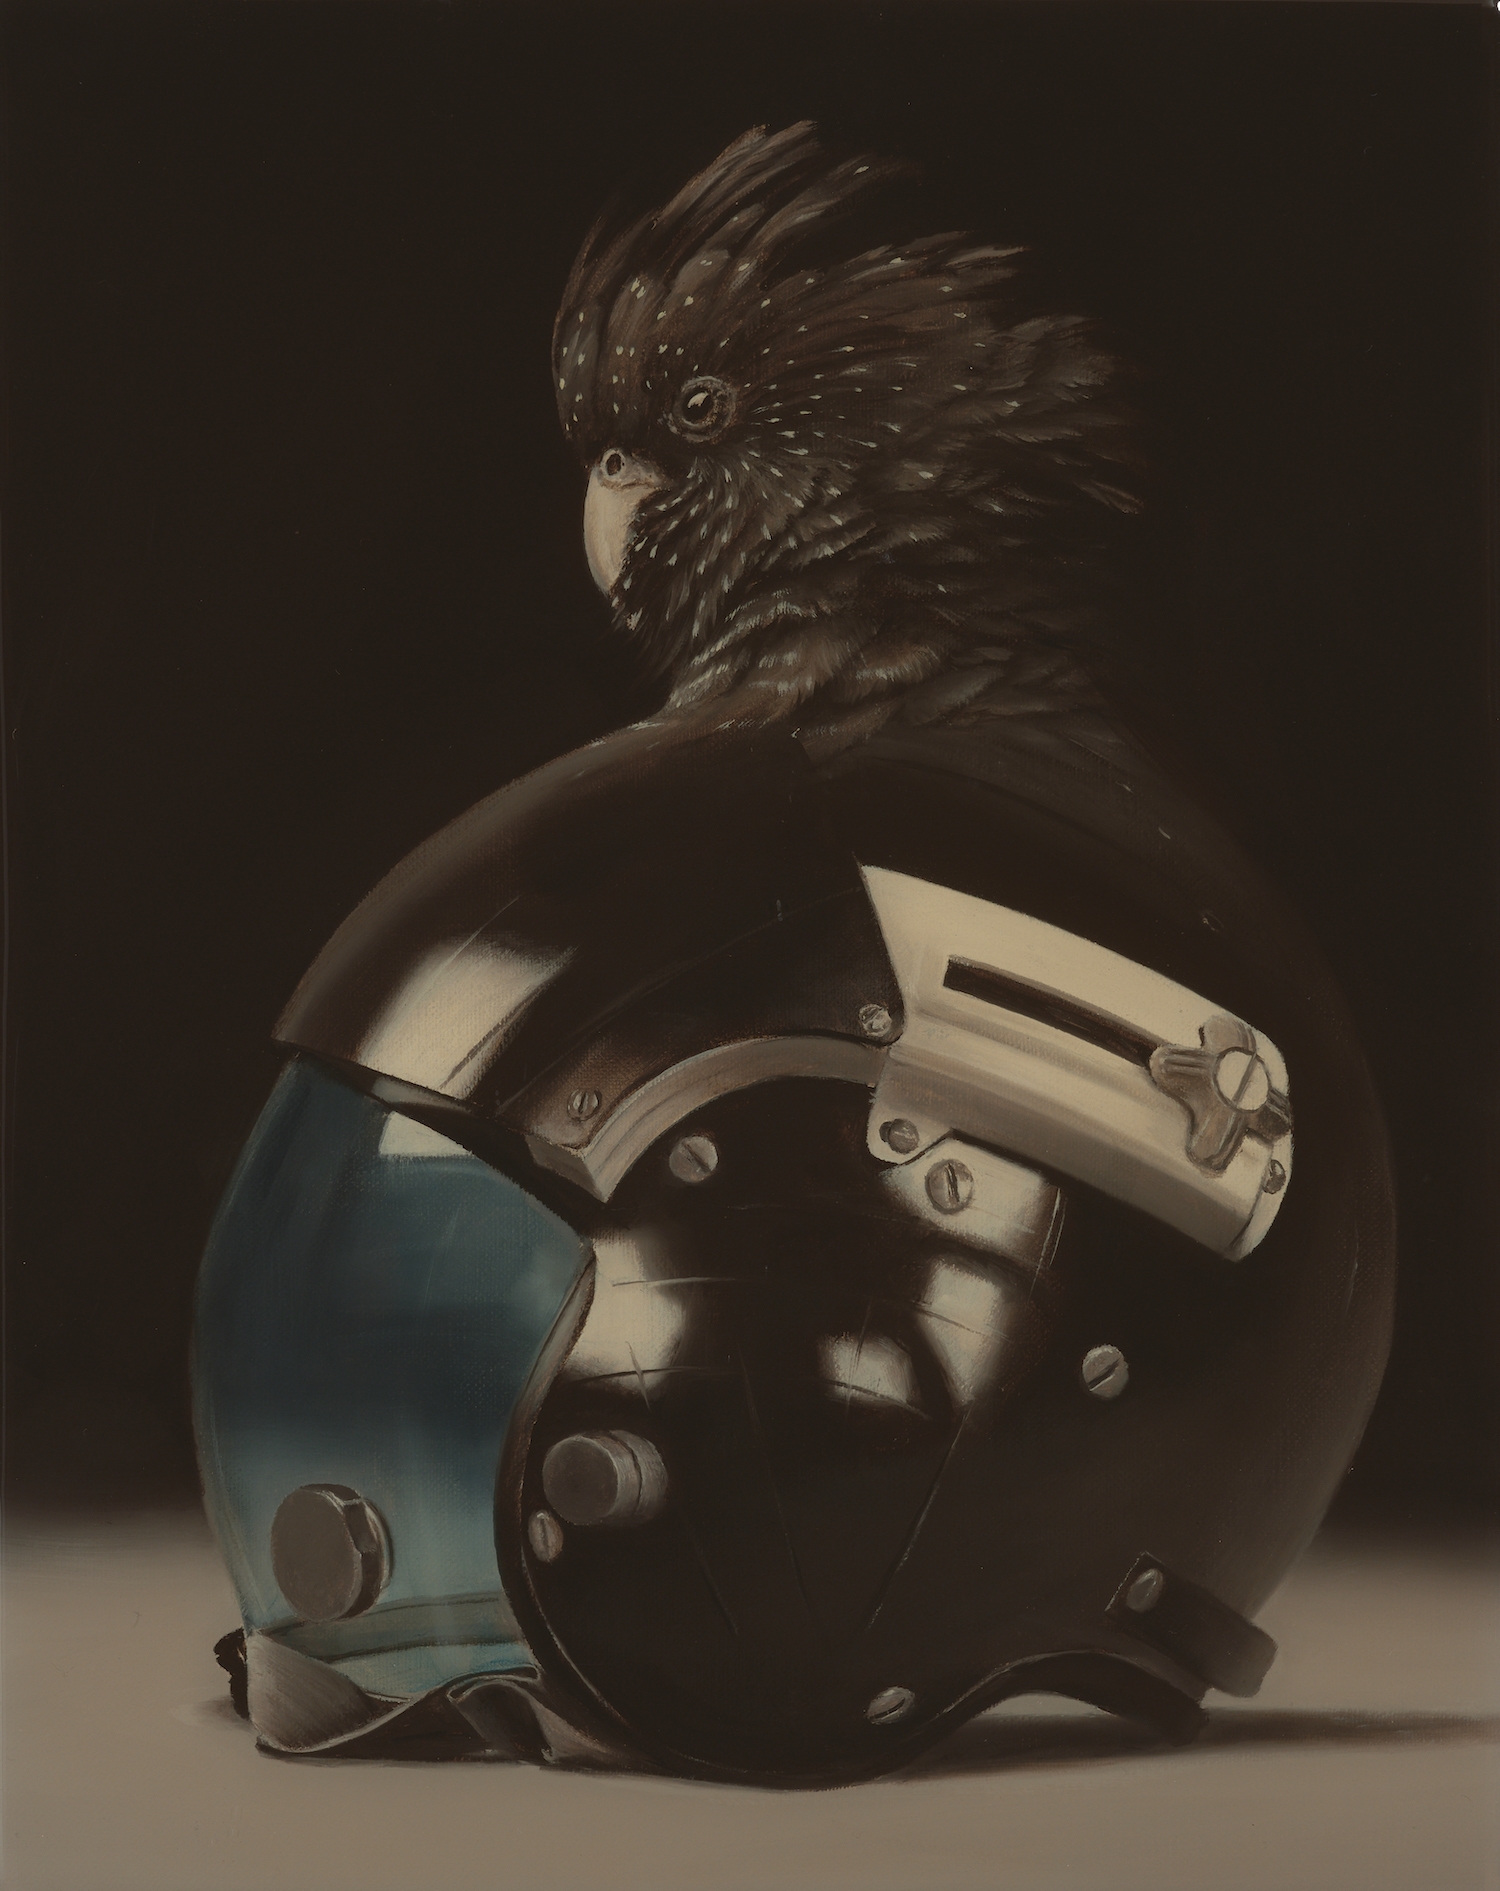 Cockatoo and Helmet by Sam Leach